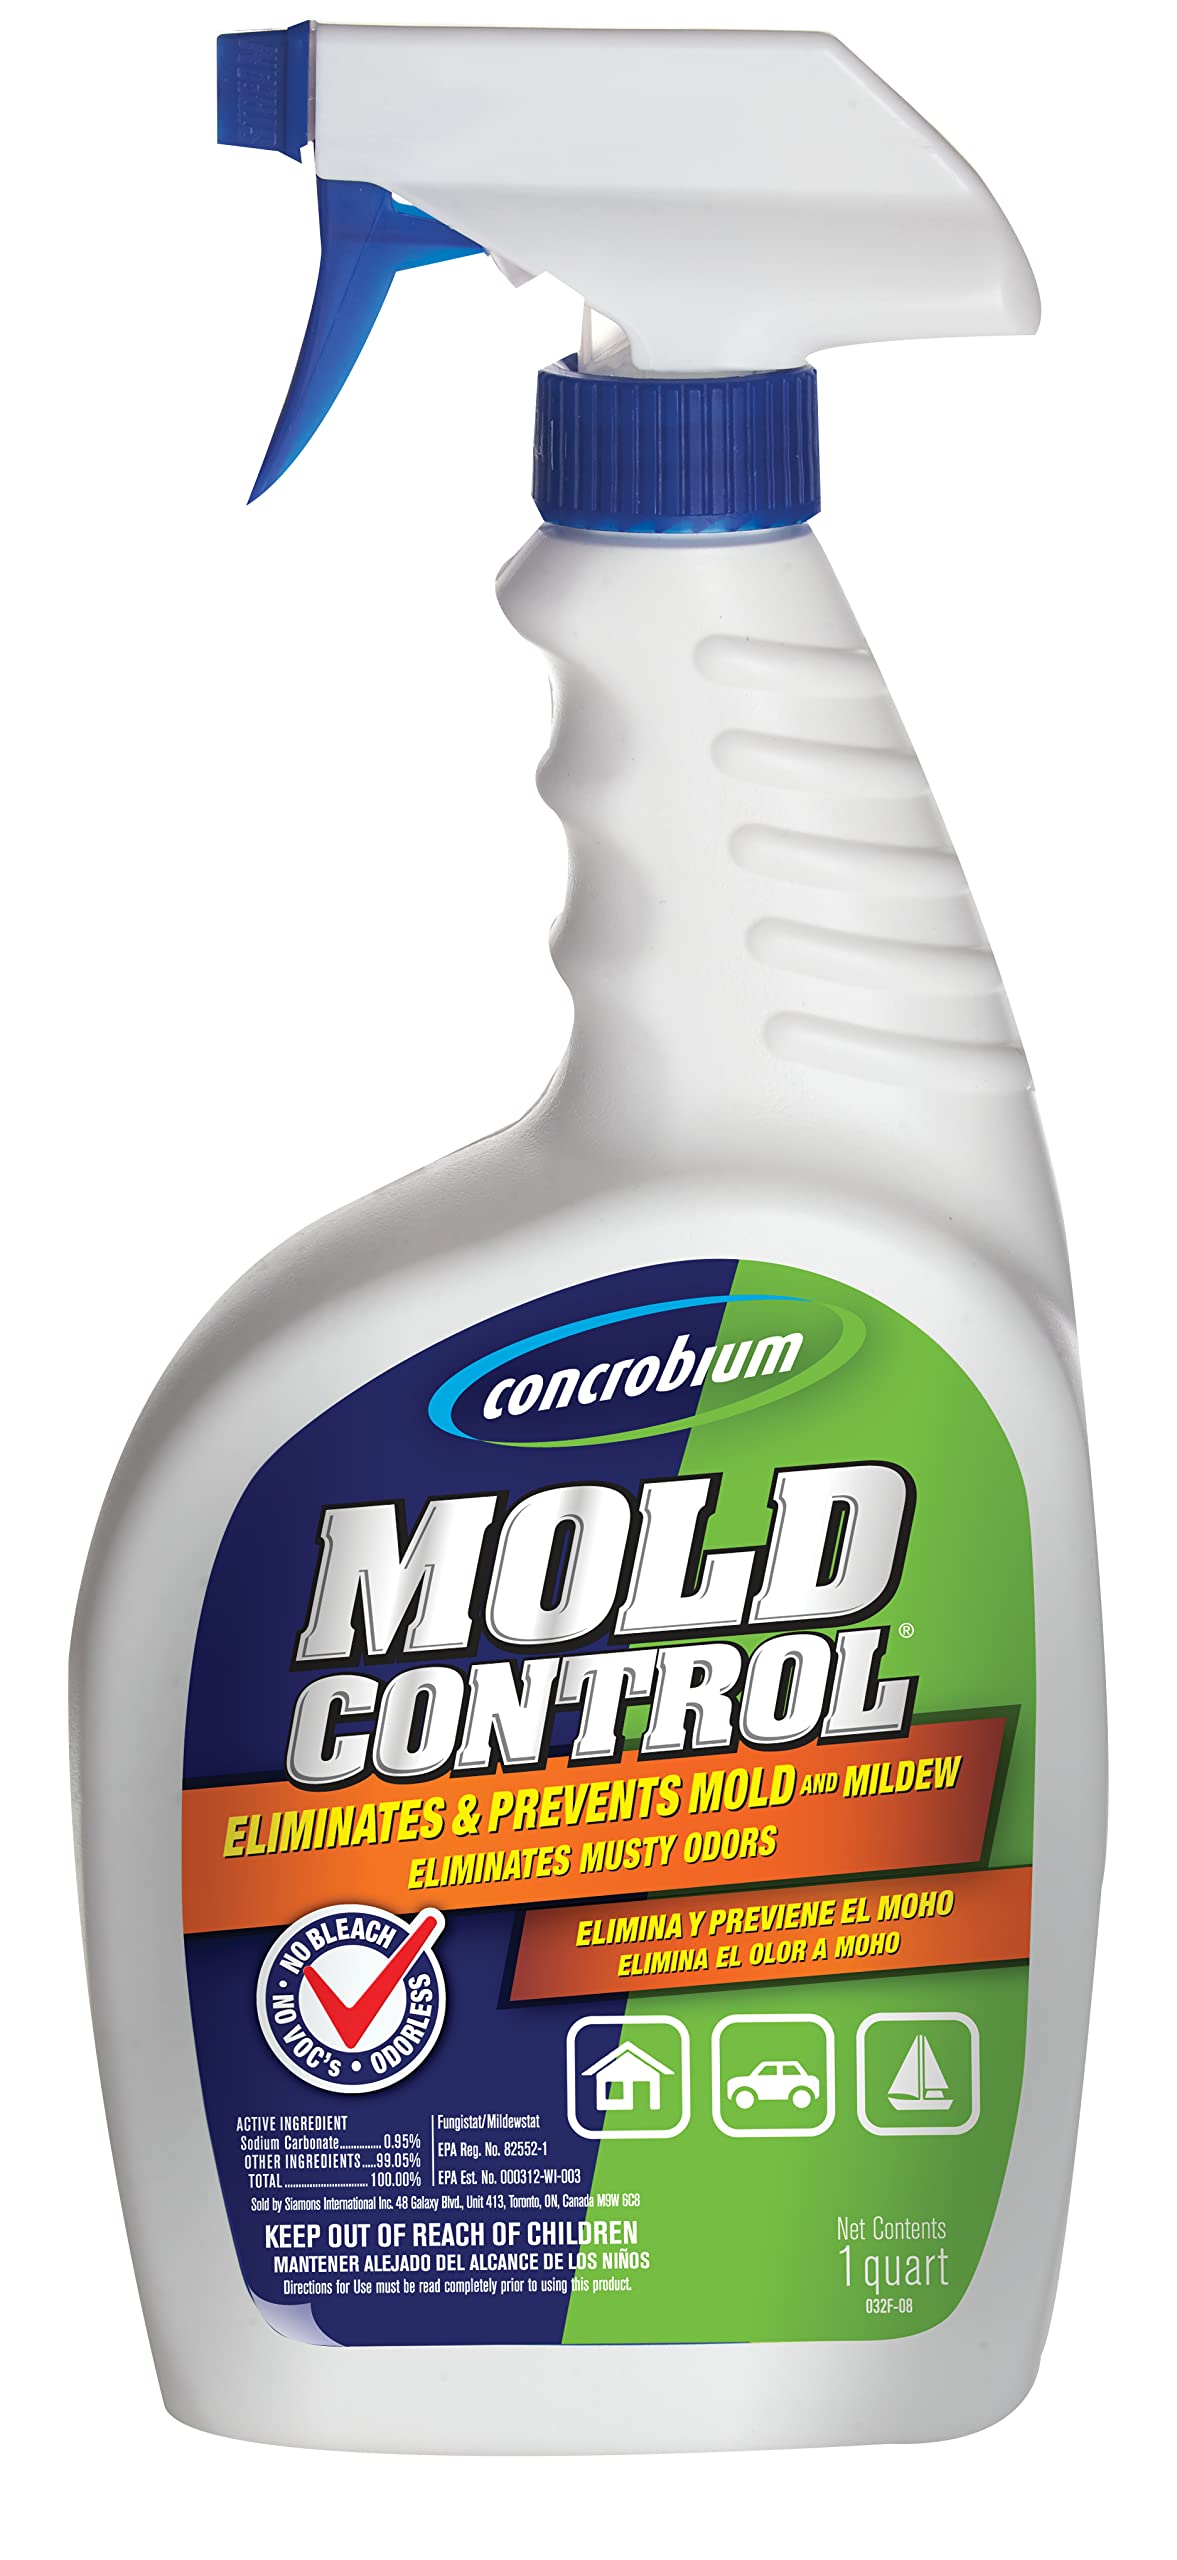 32-Oz. Concrobium Mold Control Spray $3.35 + Free Shipping w/ Prime or on $35+